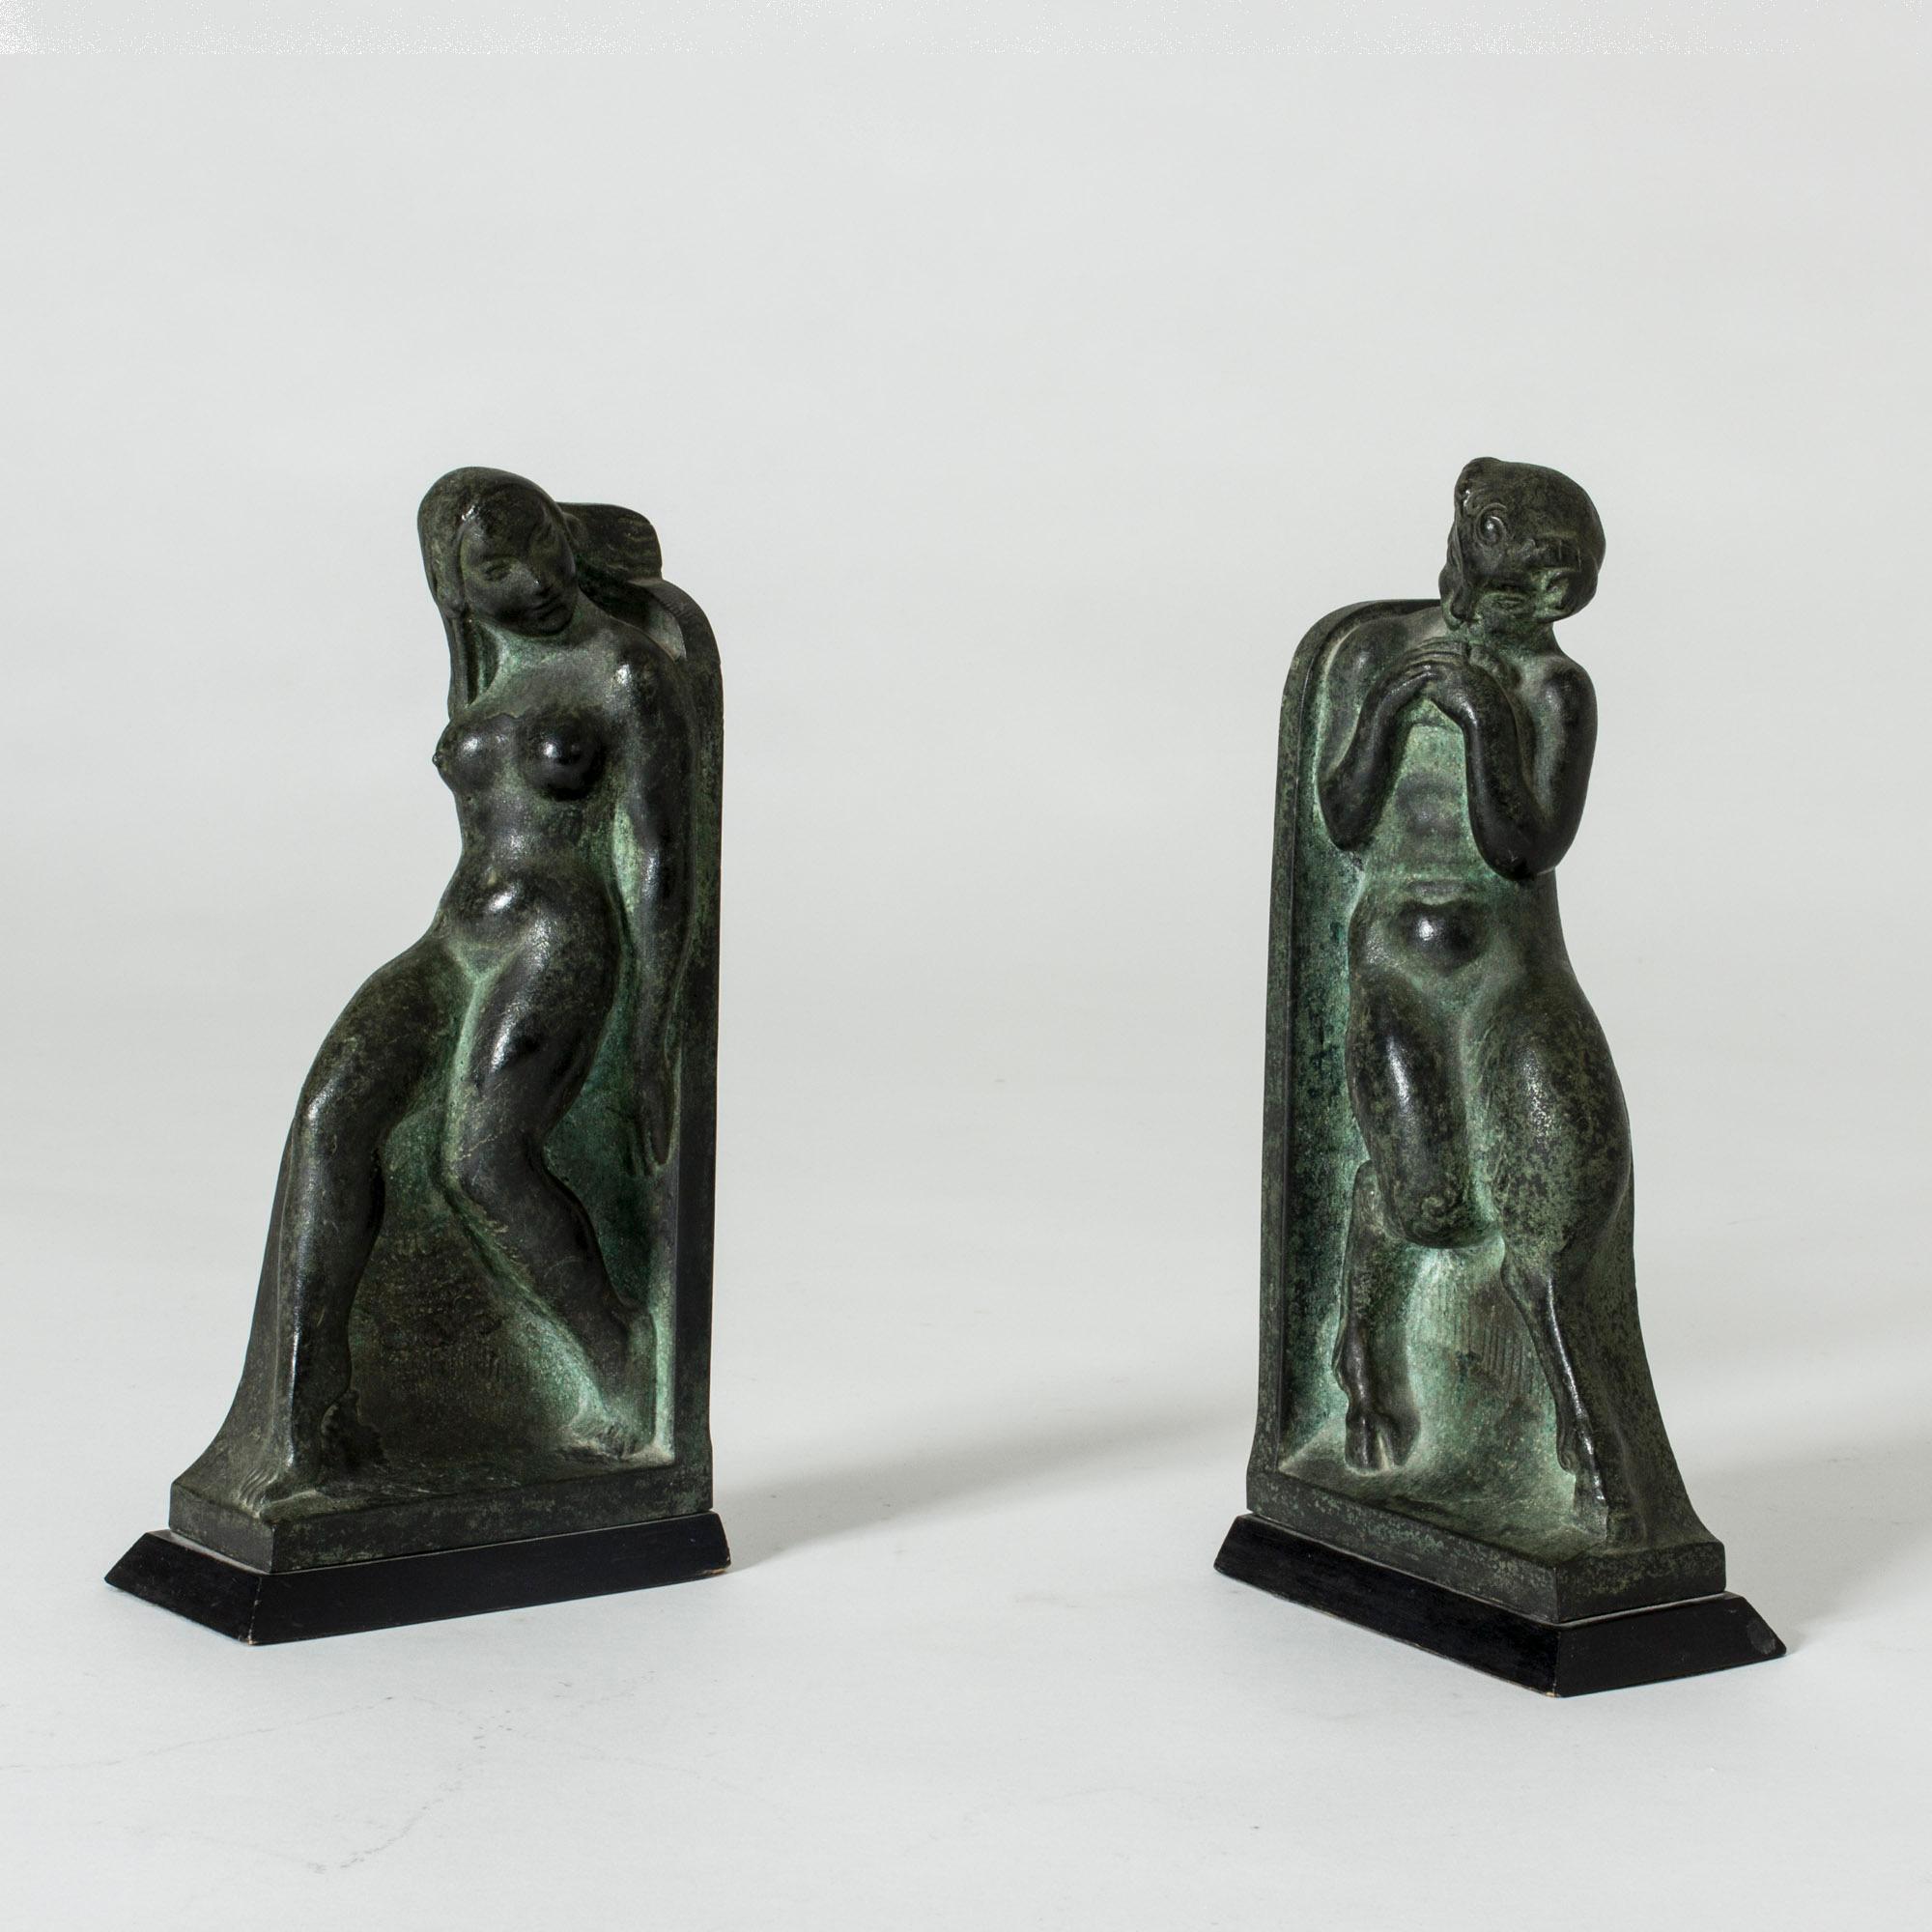 Scandinavian Modern Pair of Bronze Bookends from 1919 by Axel Gute